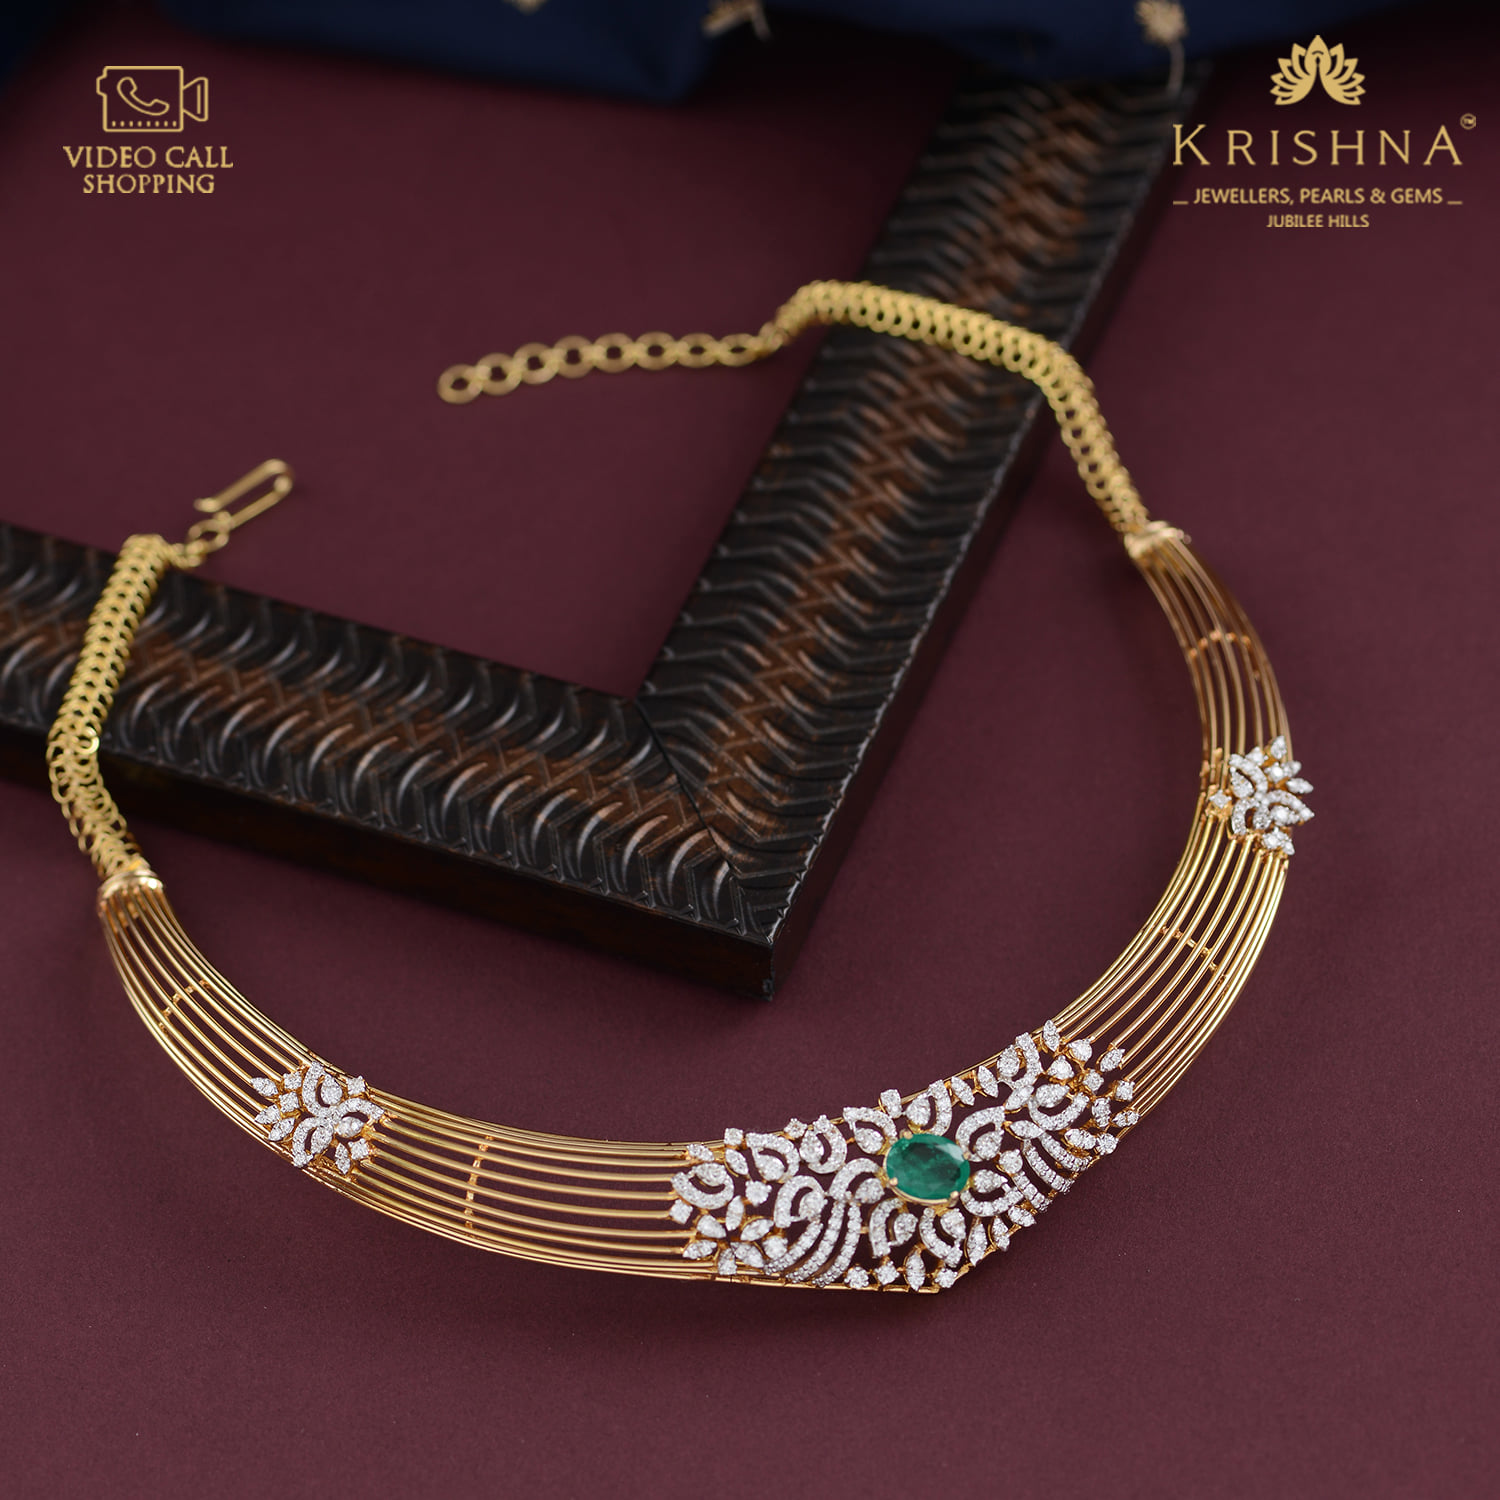 Buy Diamond Choker Style Necklace at Krishna Jewellers